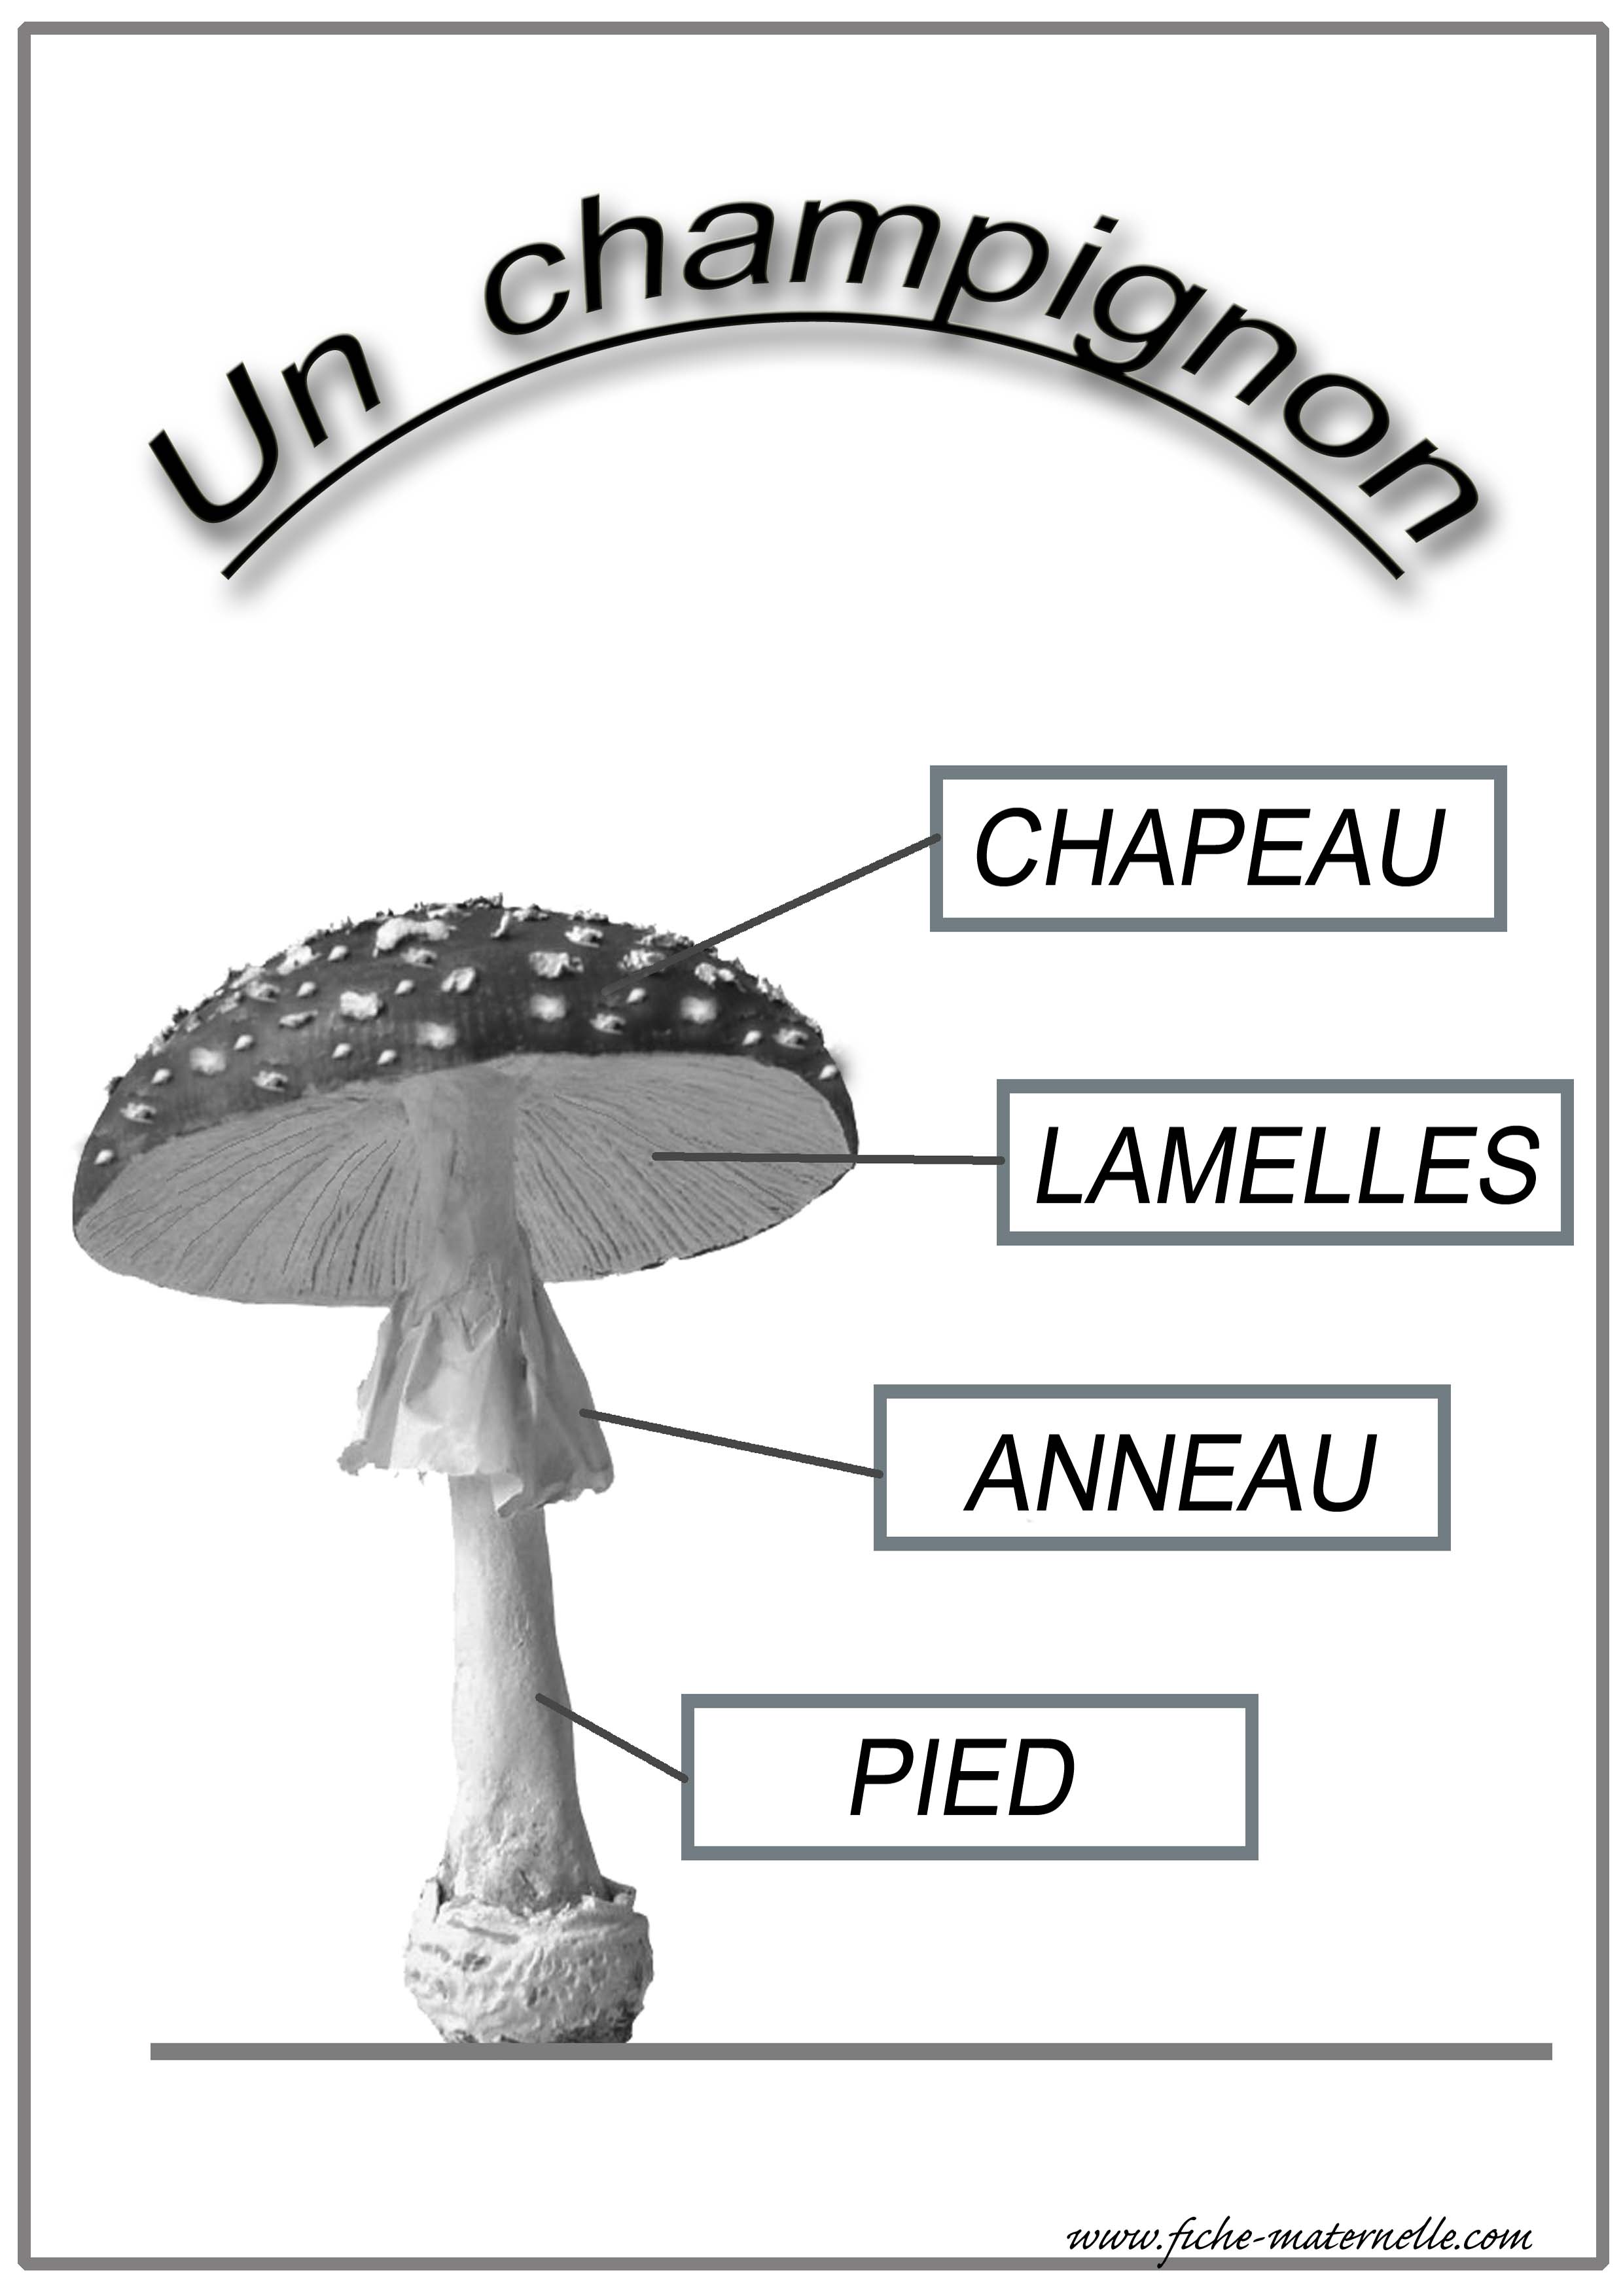 Schema du champignon